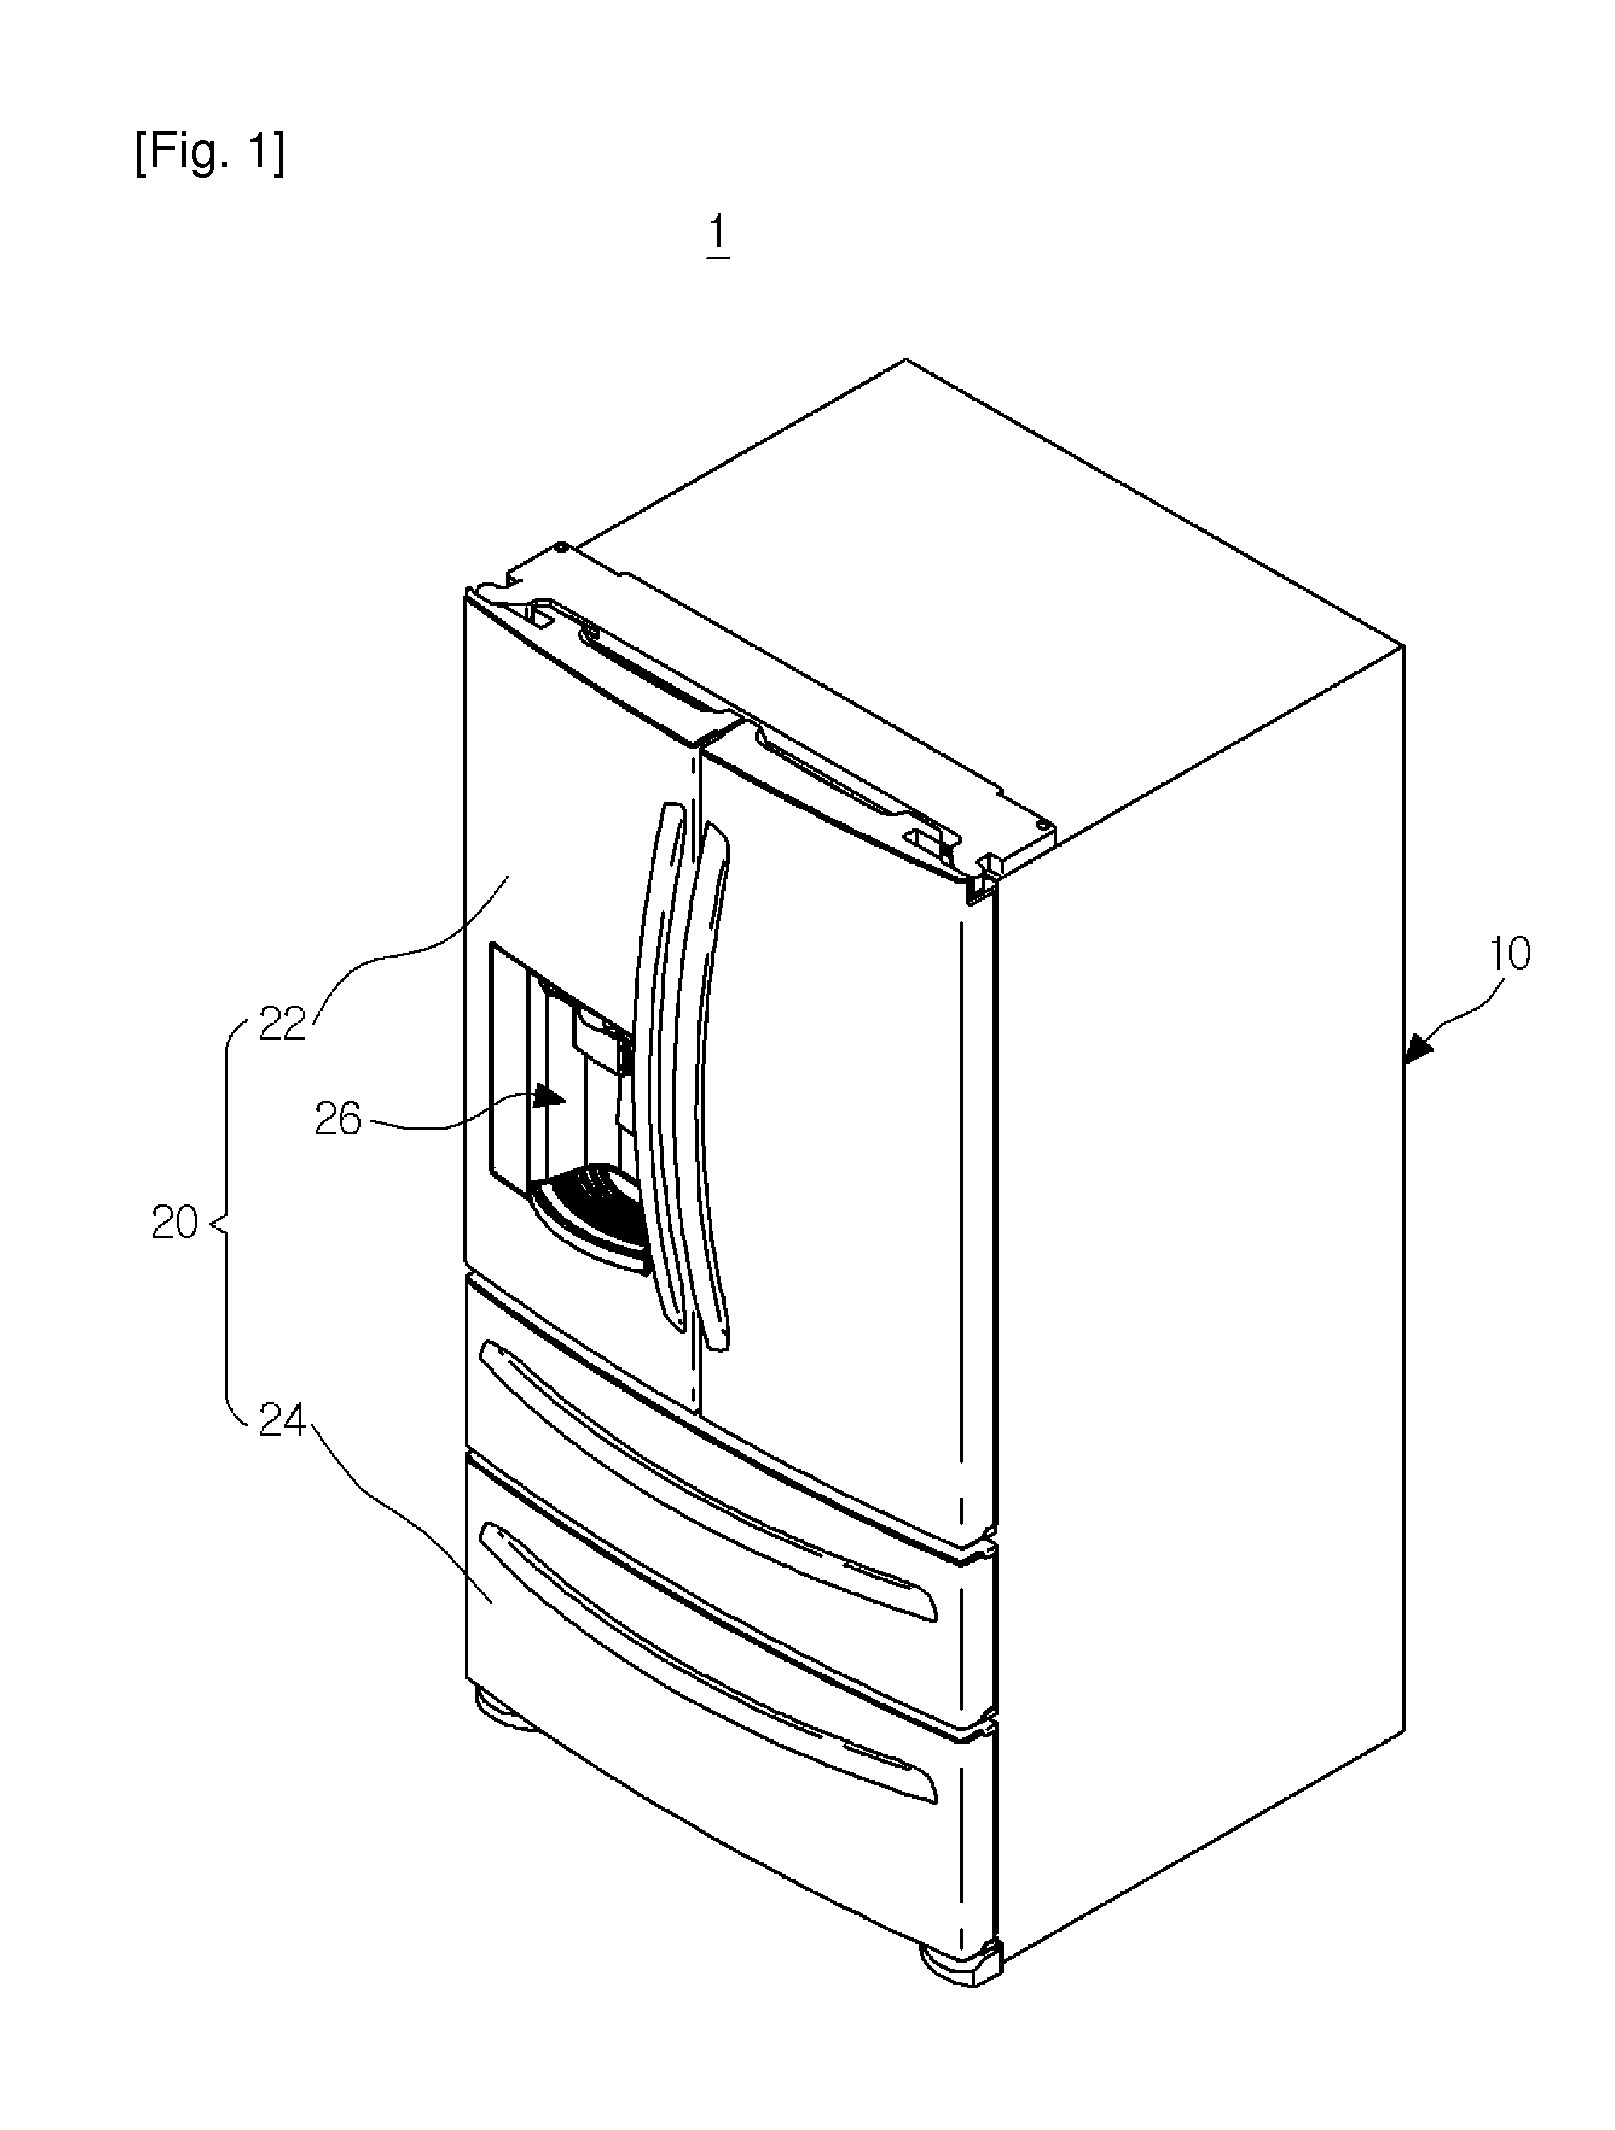 Refrigerator with ice maker